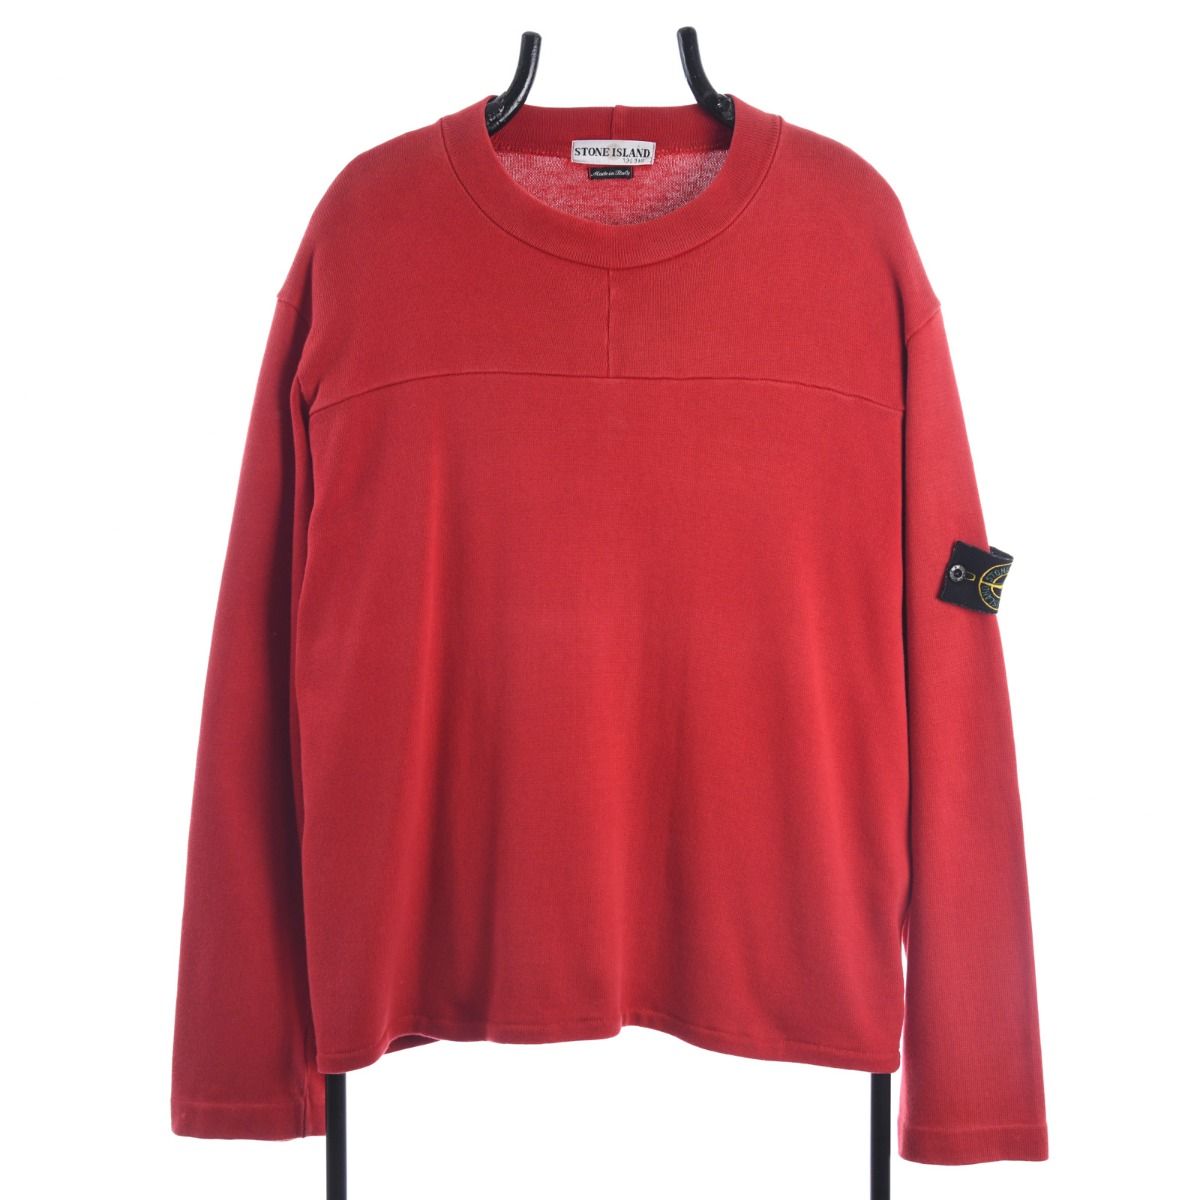 Stone Island A/W 2000 Red Sweatshirt